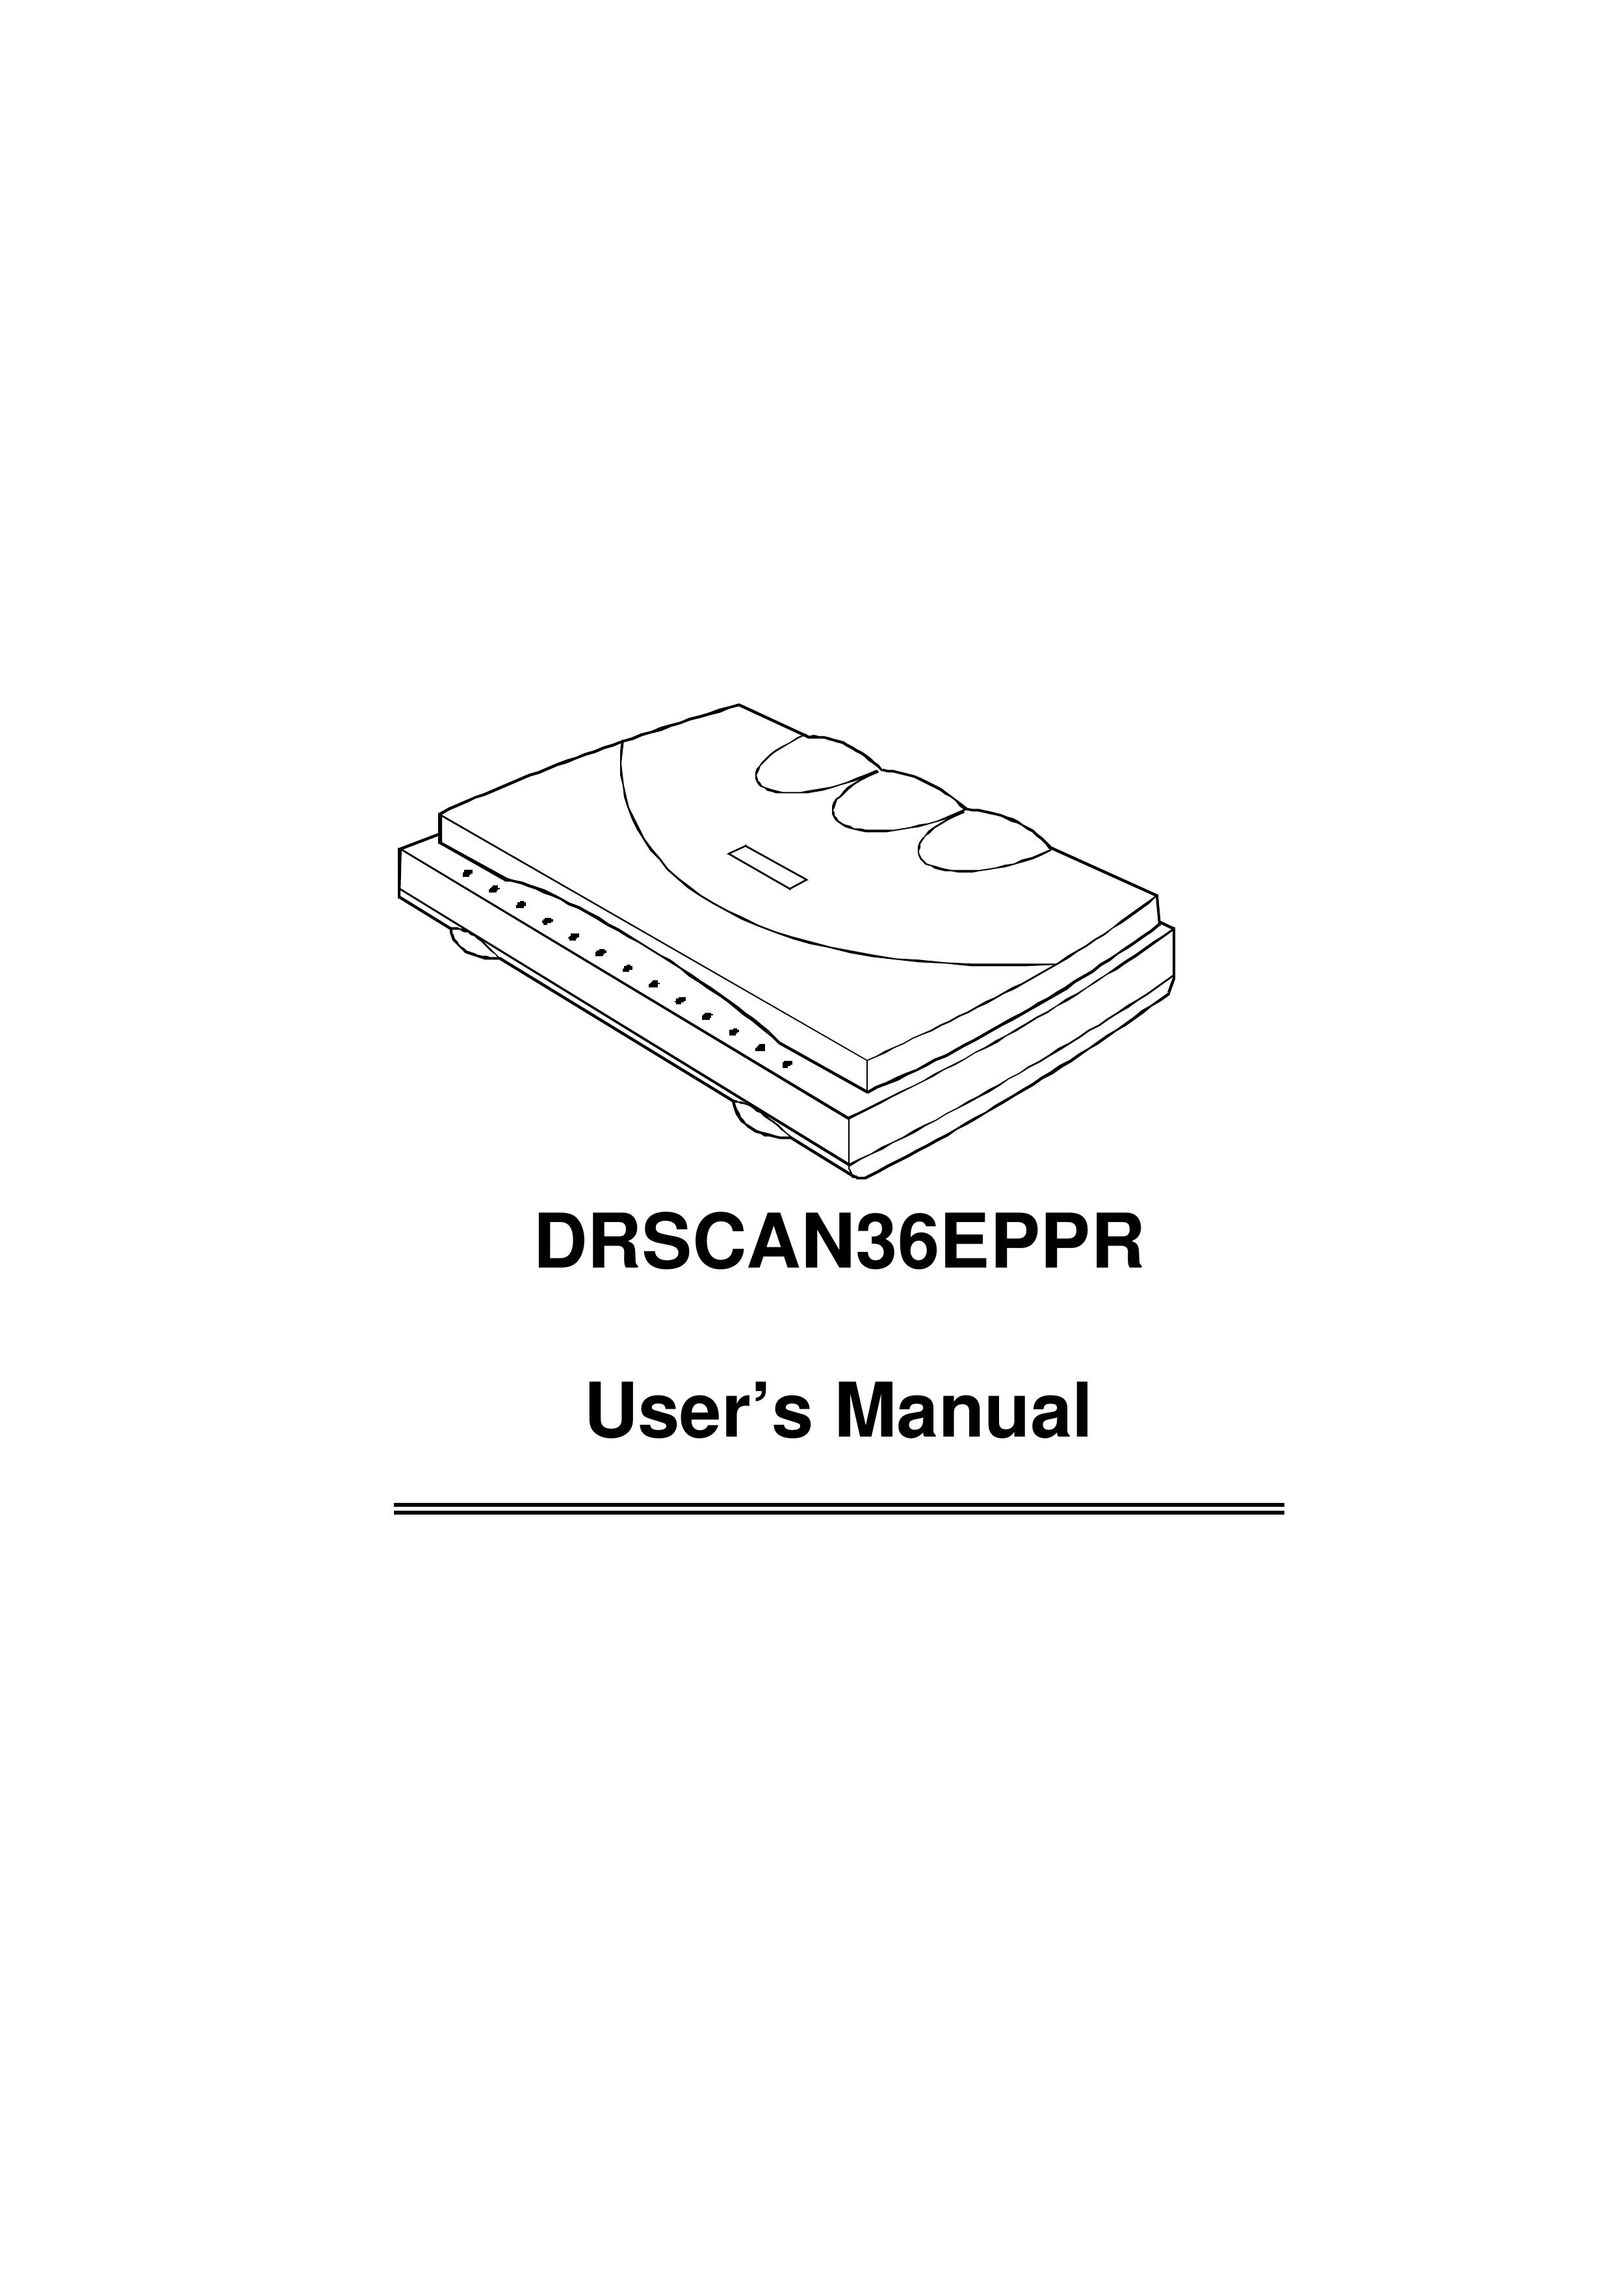 Digital Research Technologies DRSCAN36EPPR Scanner User Manual